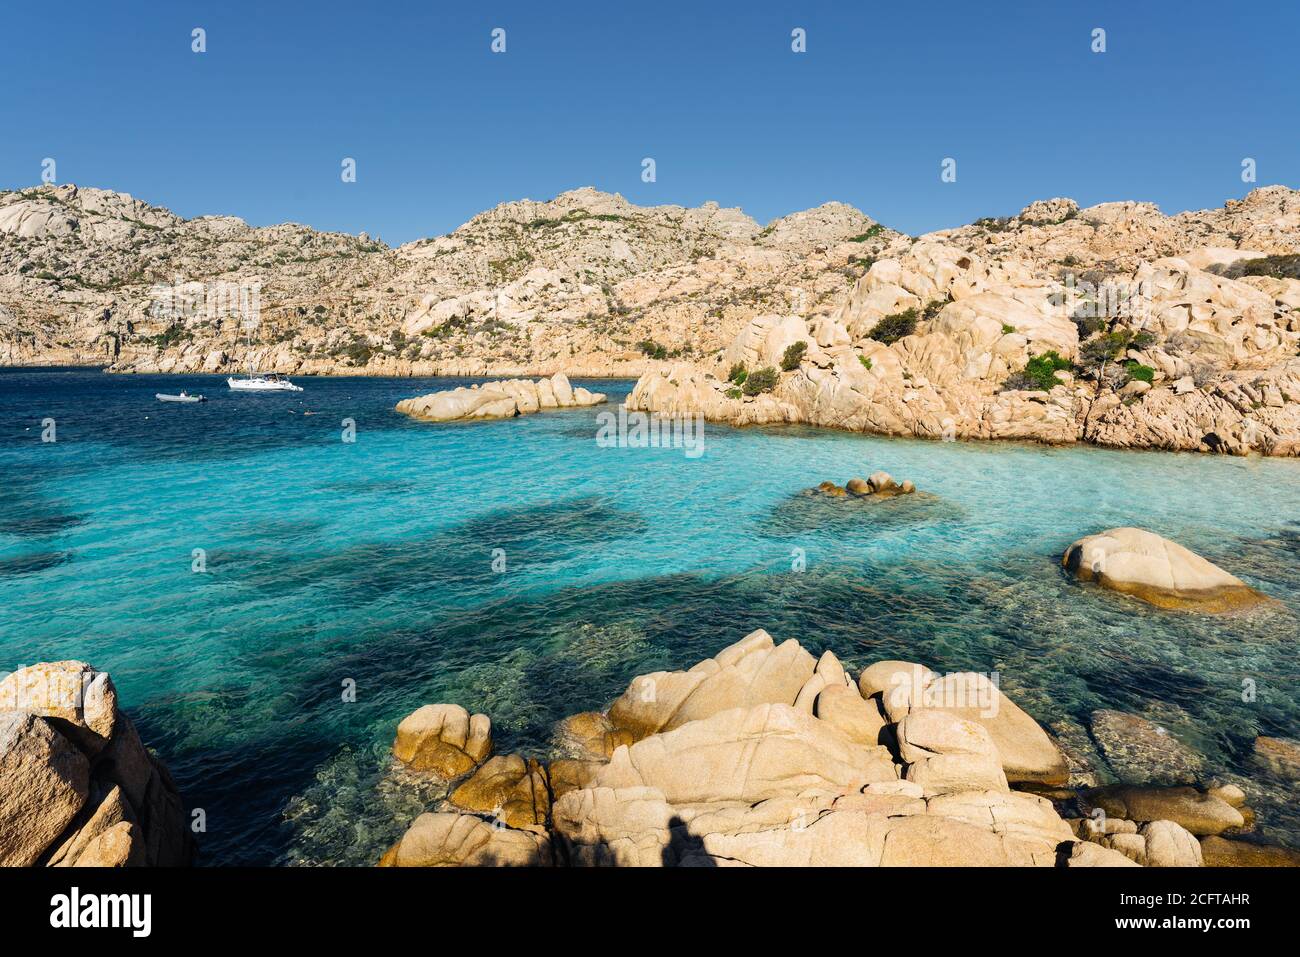 Cala Coticcio, magnifique baie de l'île de Caprera, la Maddalena, Sardaigne, Italie Banque D'Images